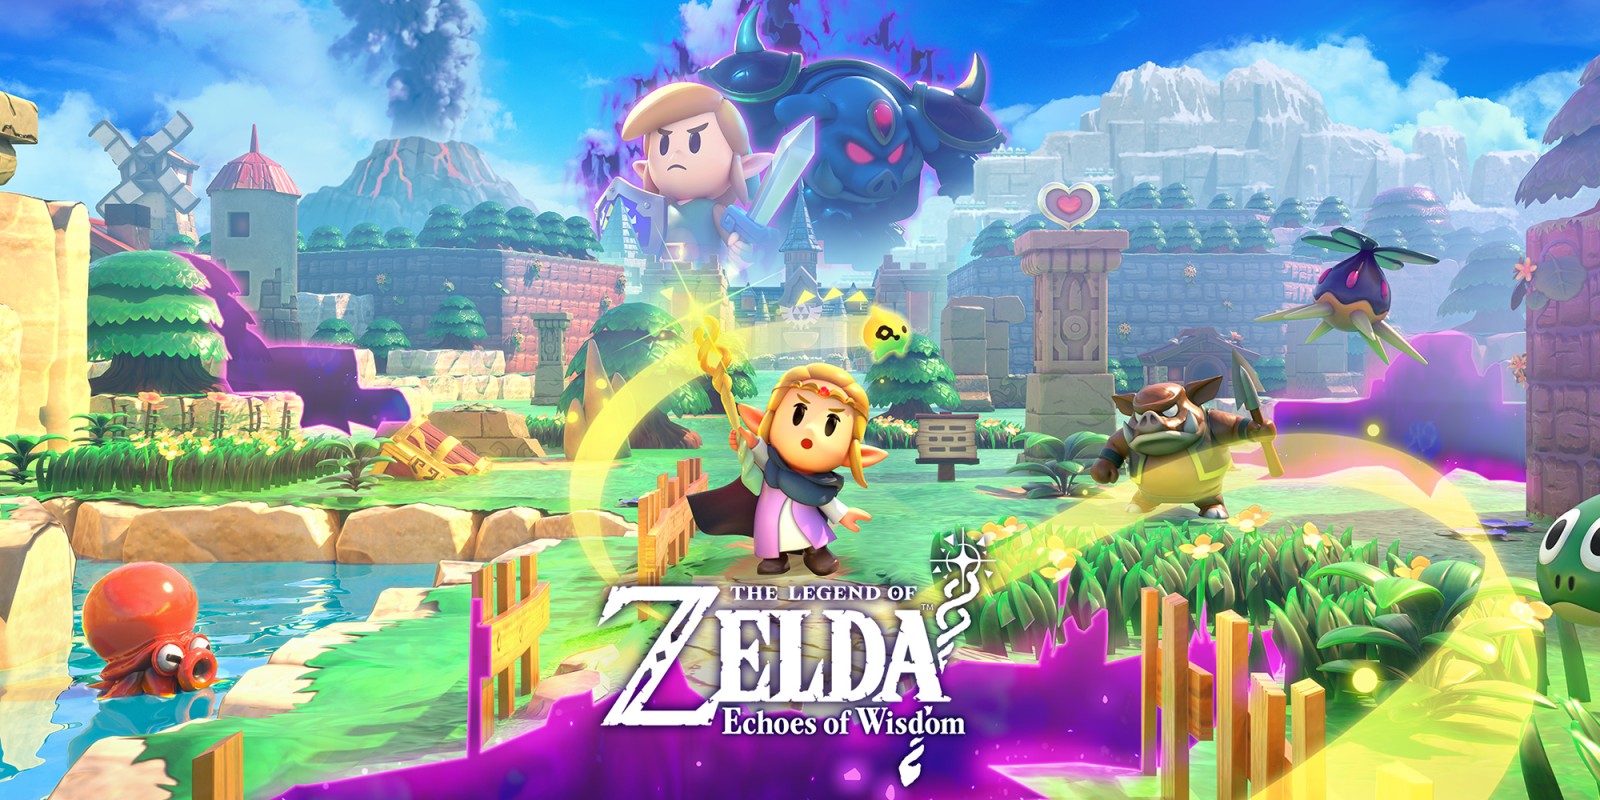 Nintendo Unveils The Legend of Zelda: Echoes of Wisdom at Nintendo Direct